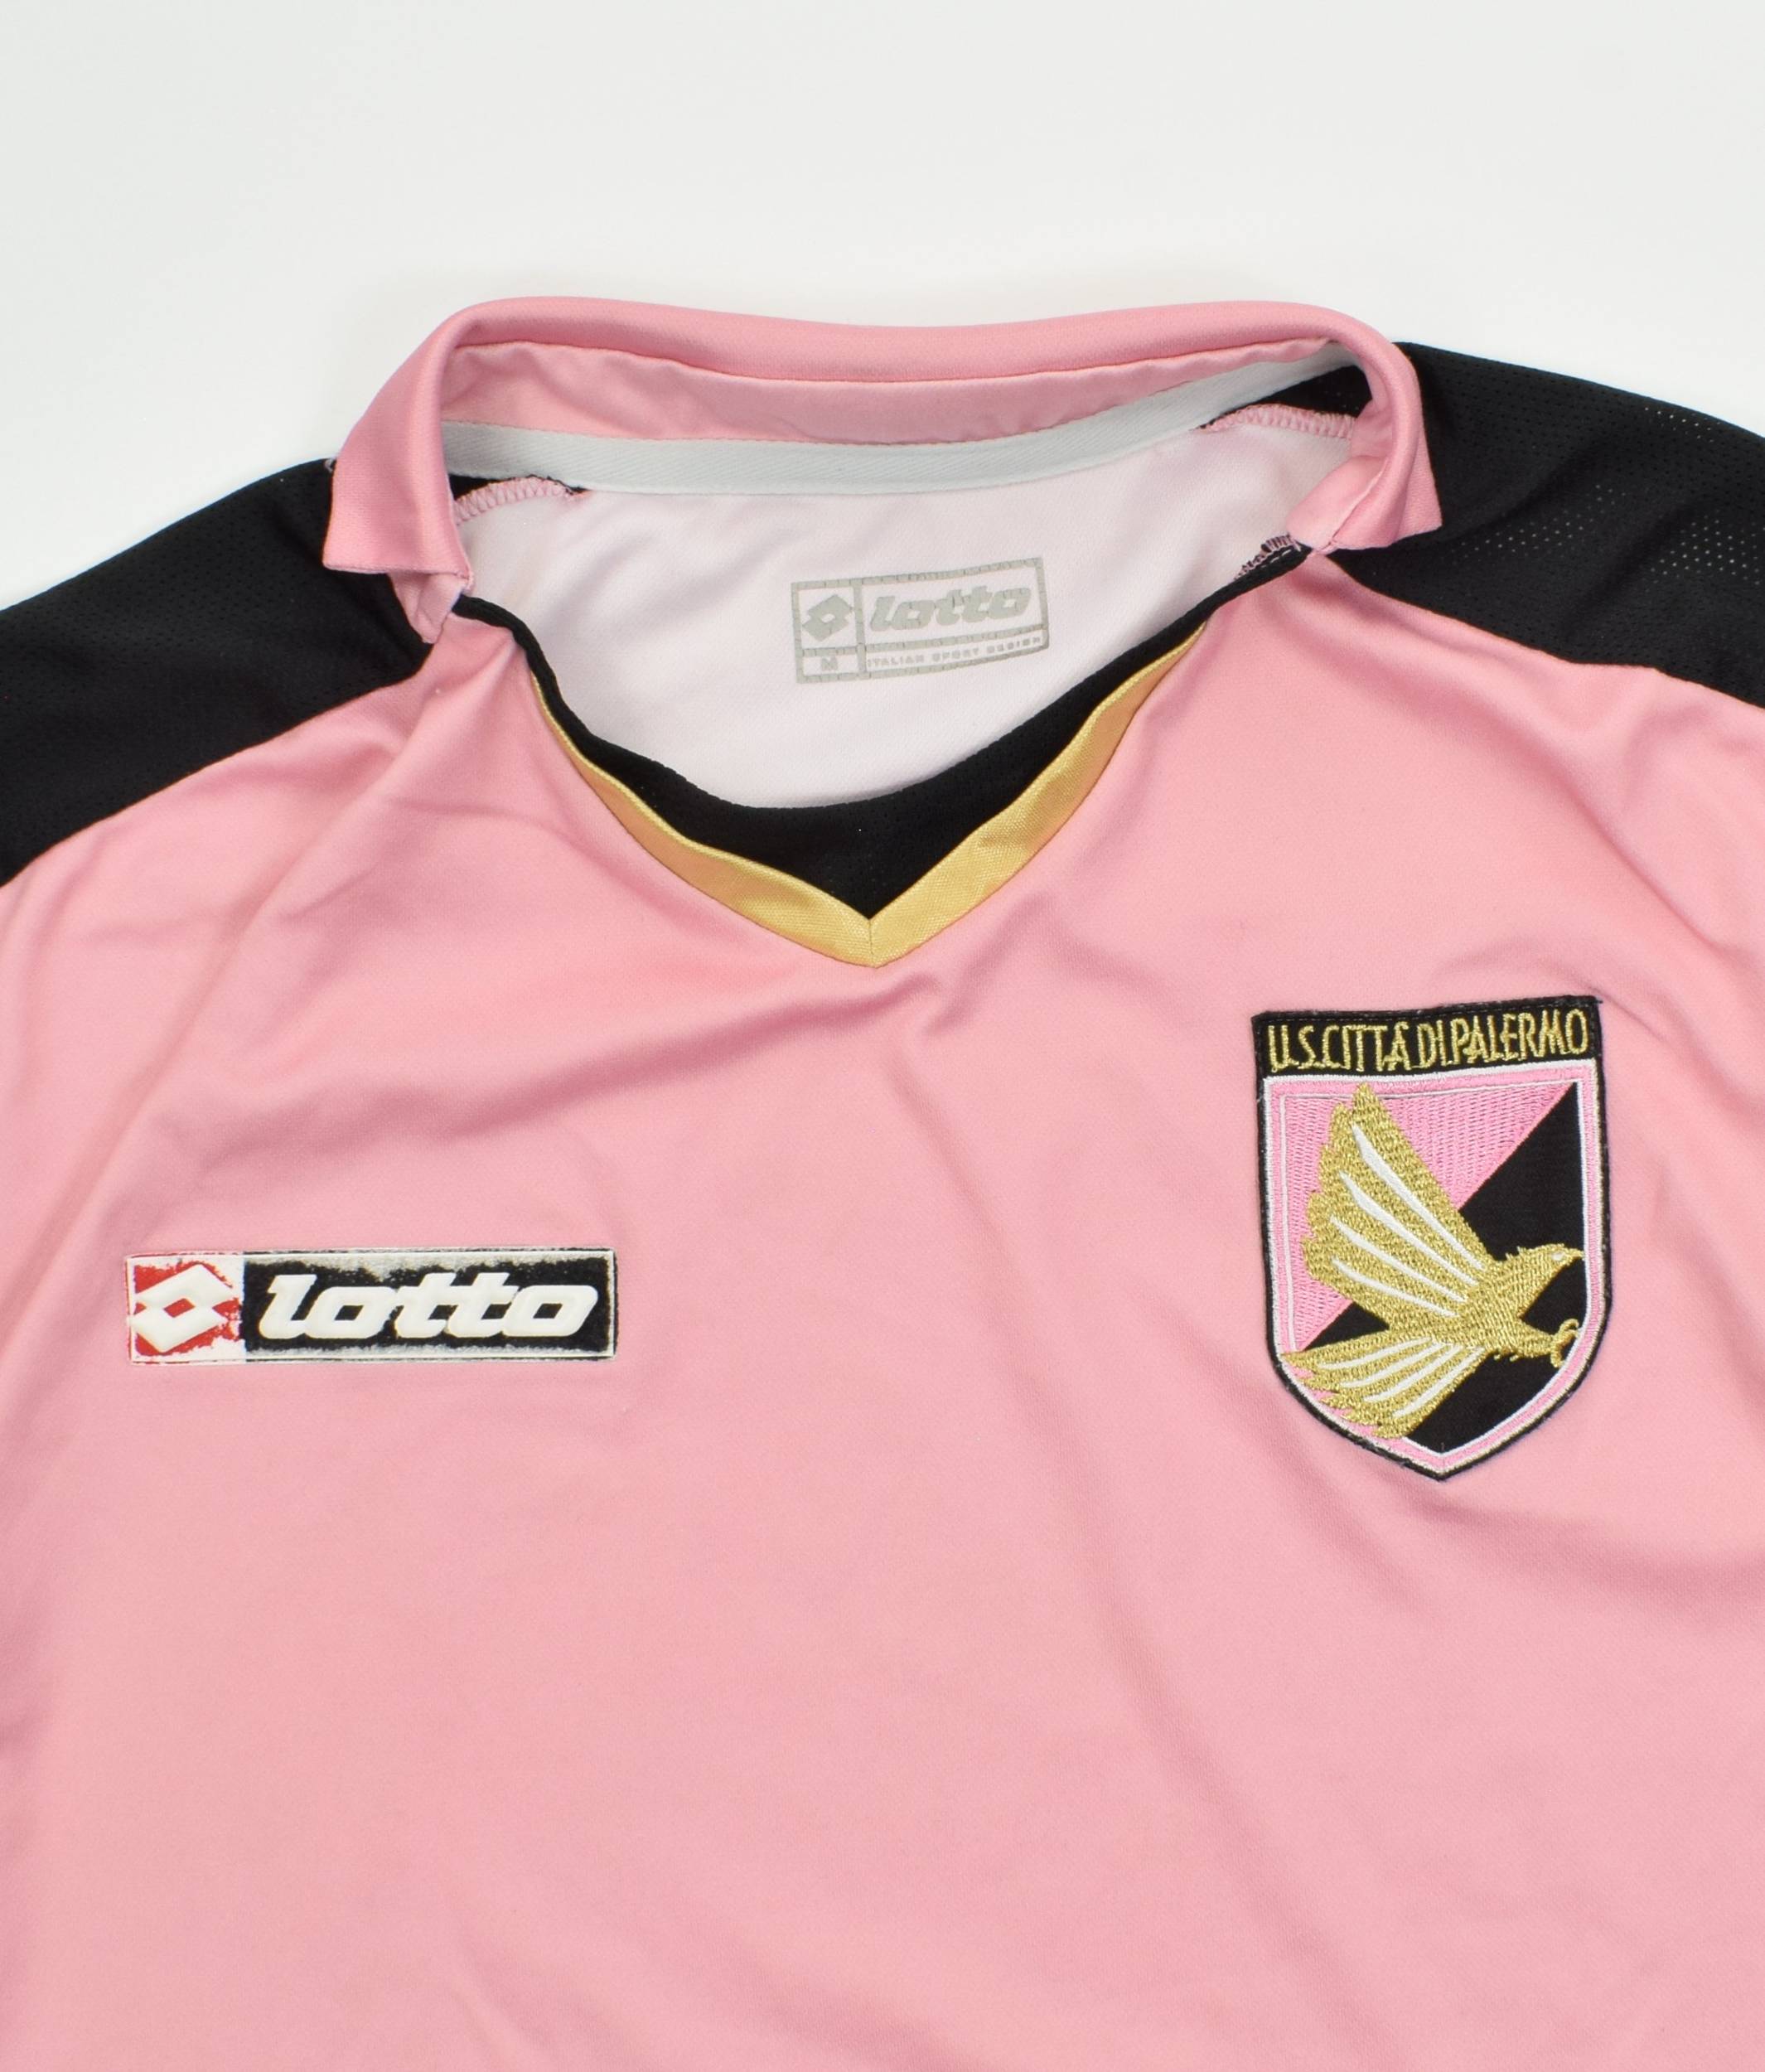 Palermo 2007-2008 Home Football Shirt Size XXL BNWT /9154